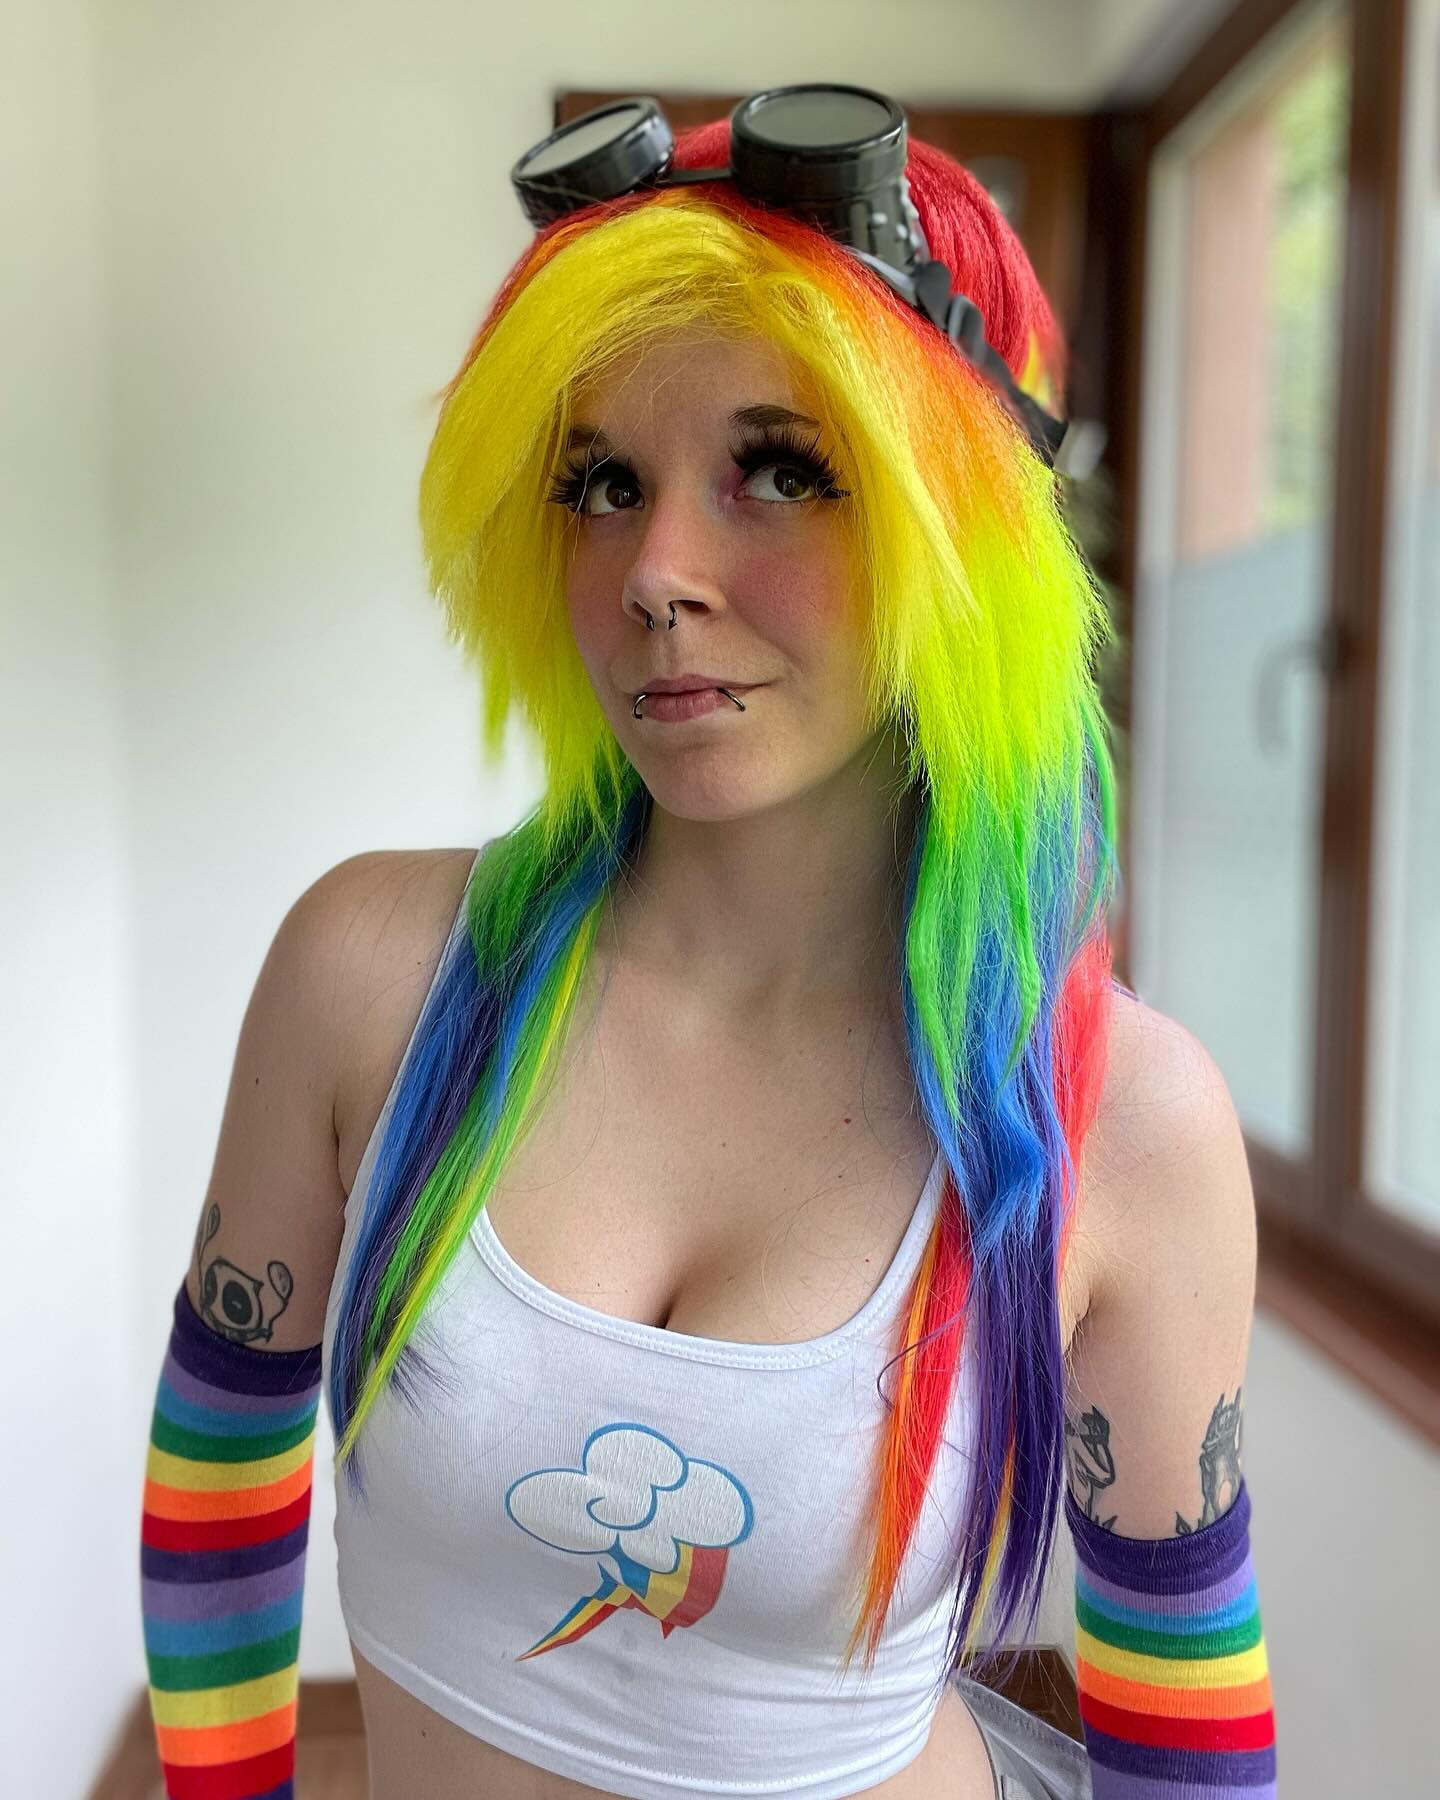 Rainbow Dash again💚💜❤️🩵💙🧡❤️
Spam Rainbow in comments 🌈